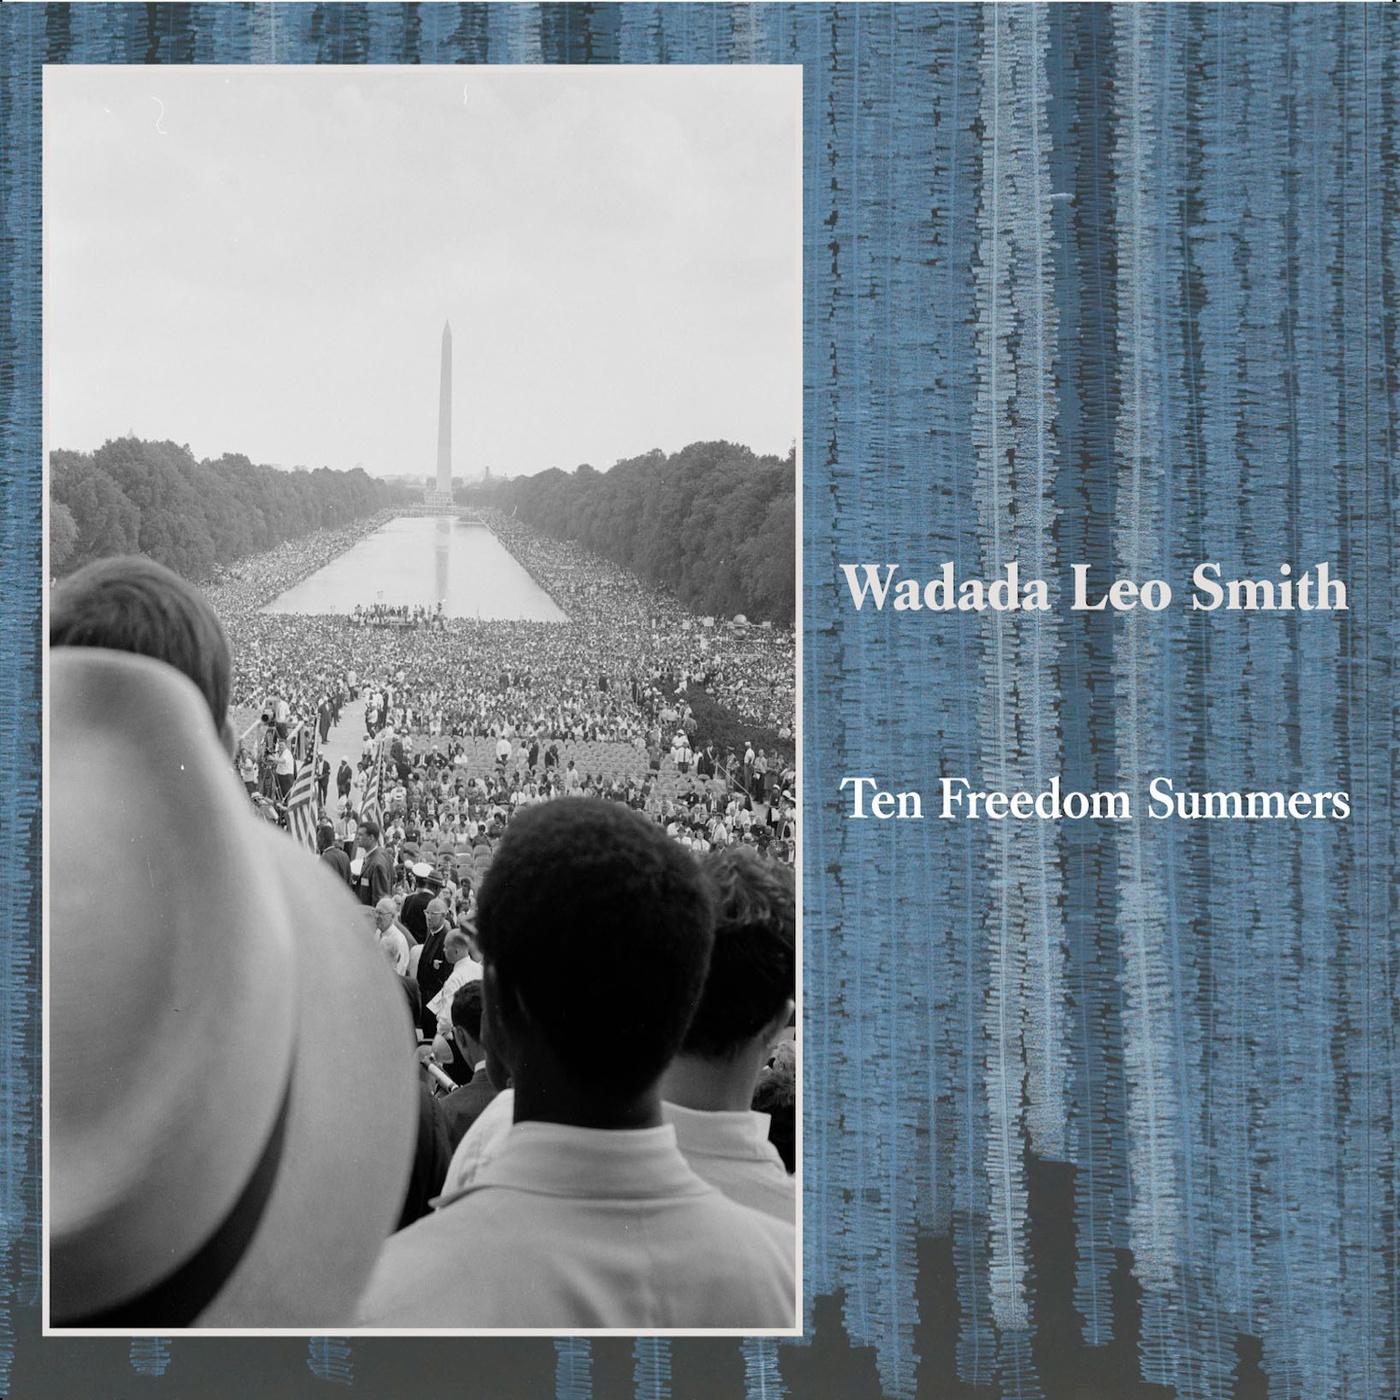 Lyndon B. Johnson's Great Society and the Civil Rights Act of 1964